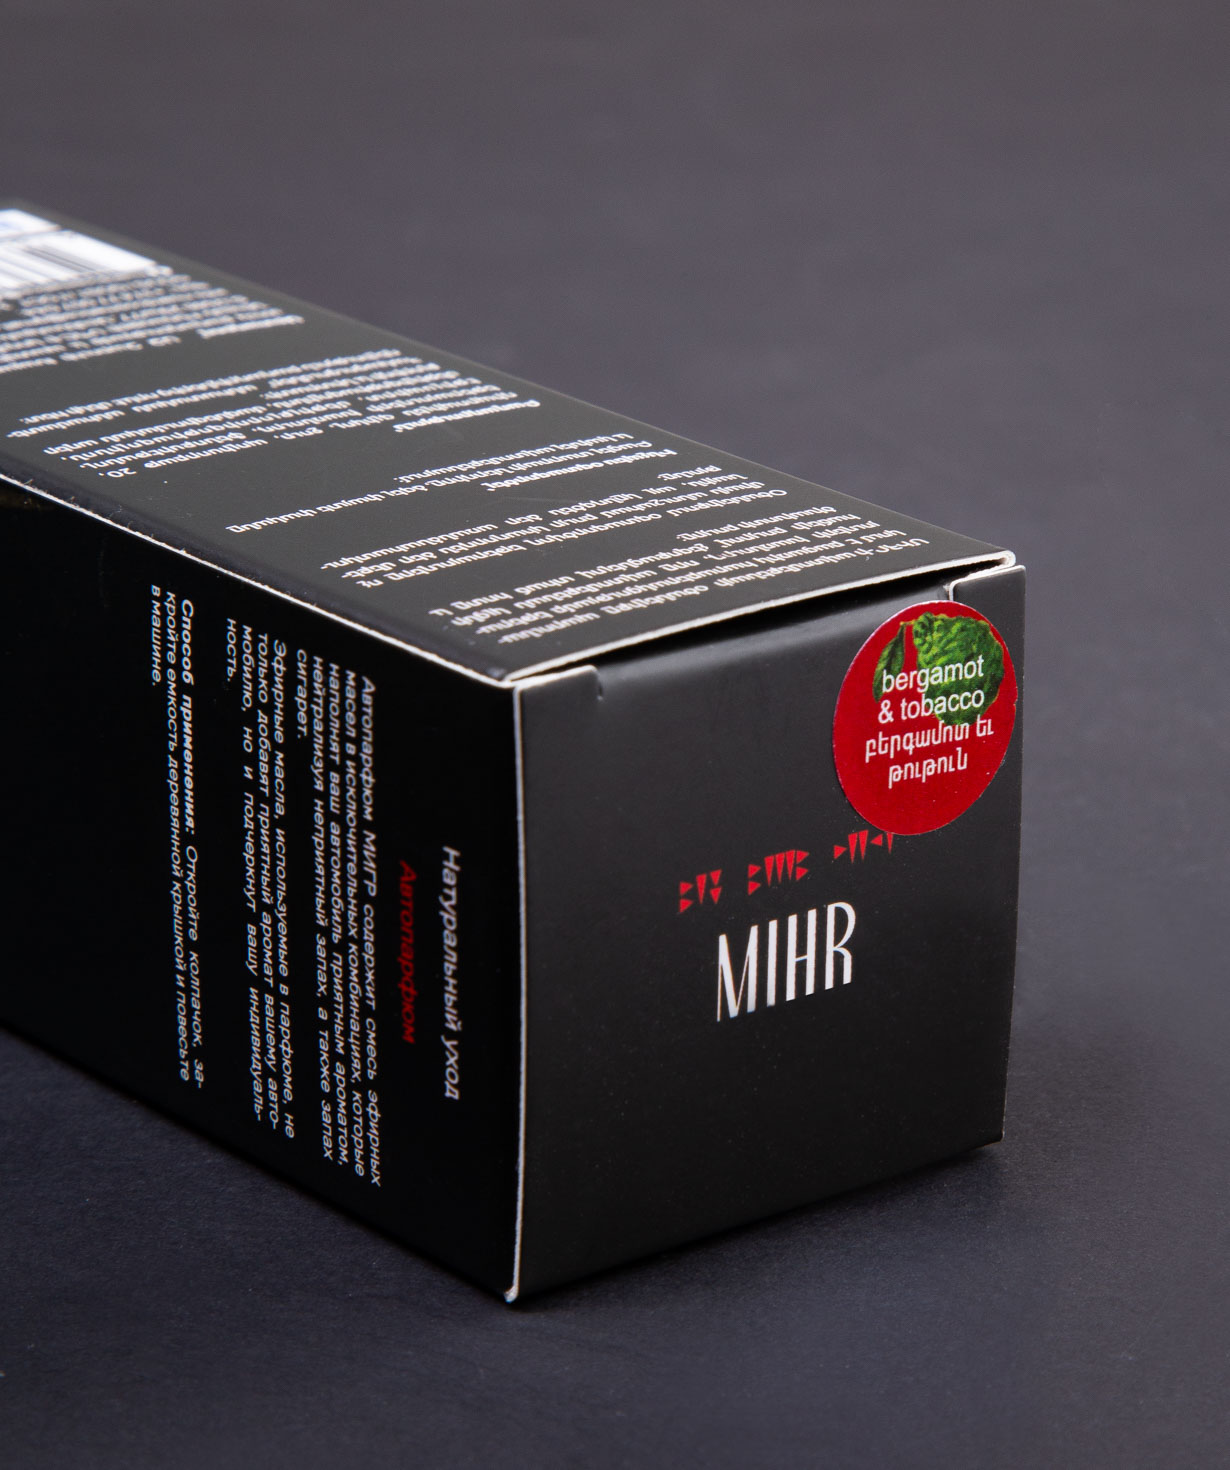 Car diffuser «Mihr» bergamot and tobacco